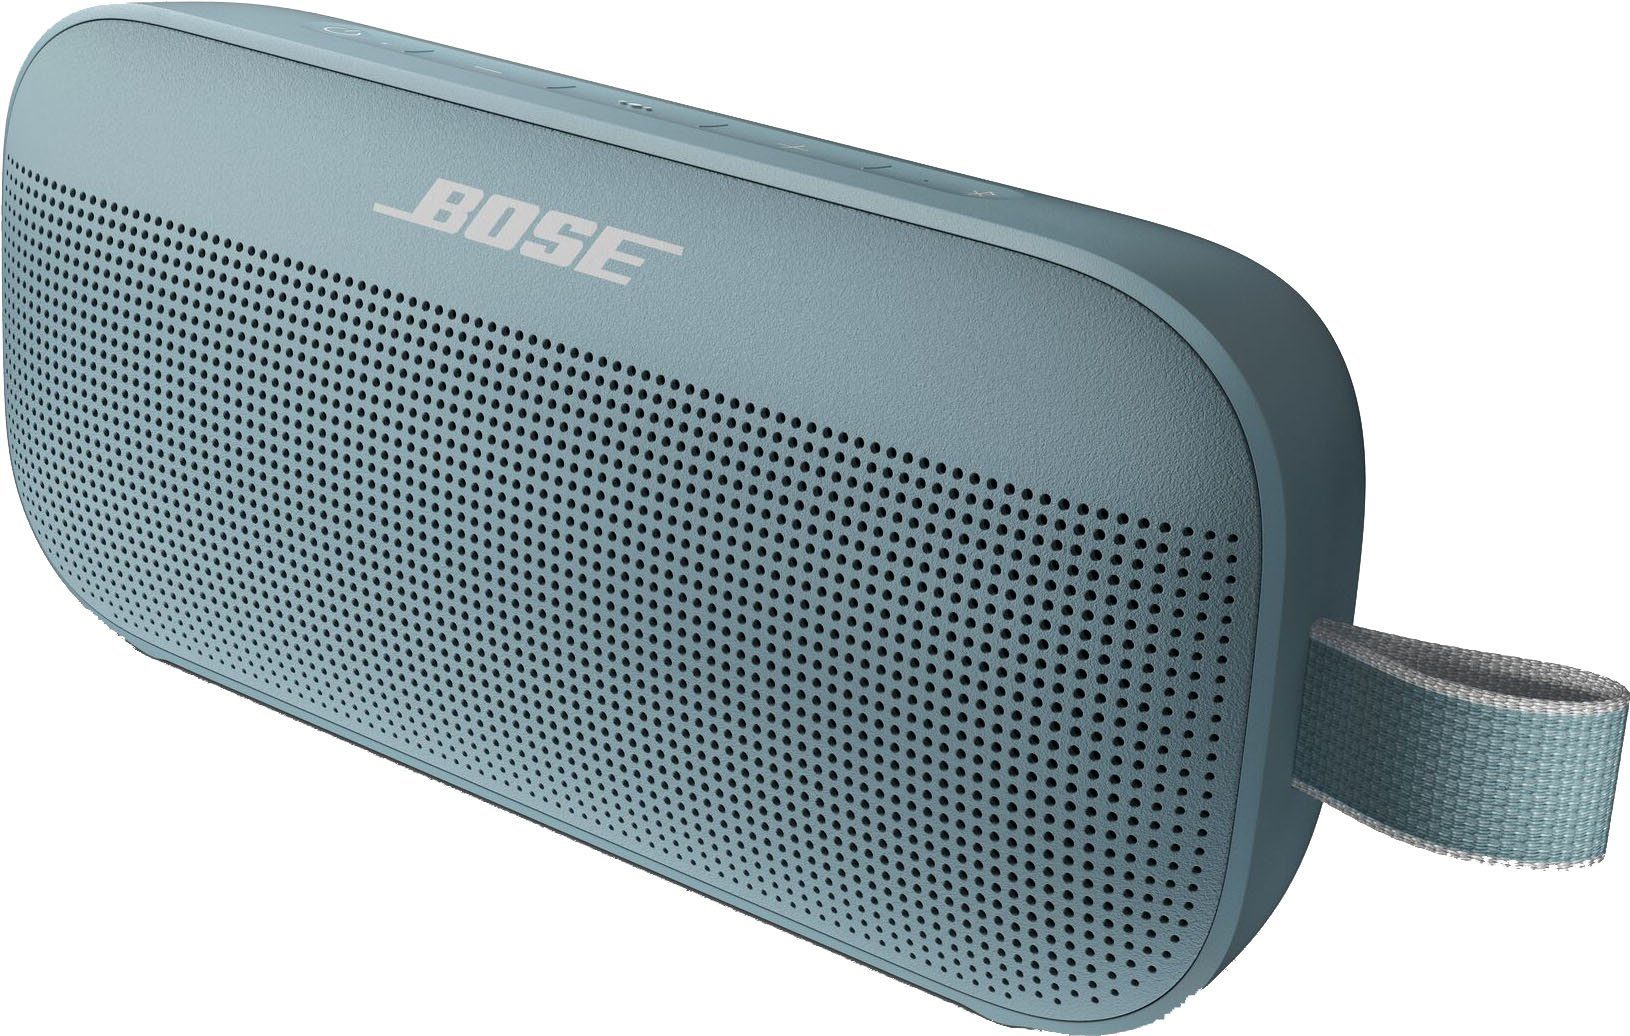 SoundLink Stereo Lautsprecher Bose blau Flex (Bluetooth)